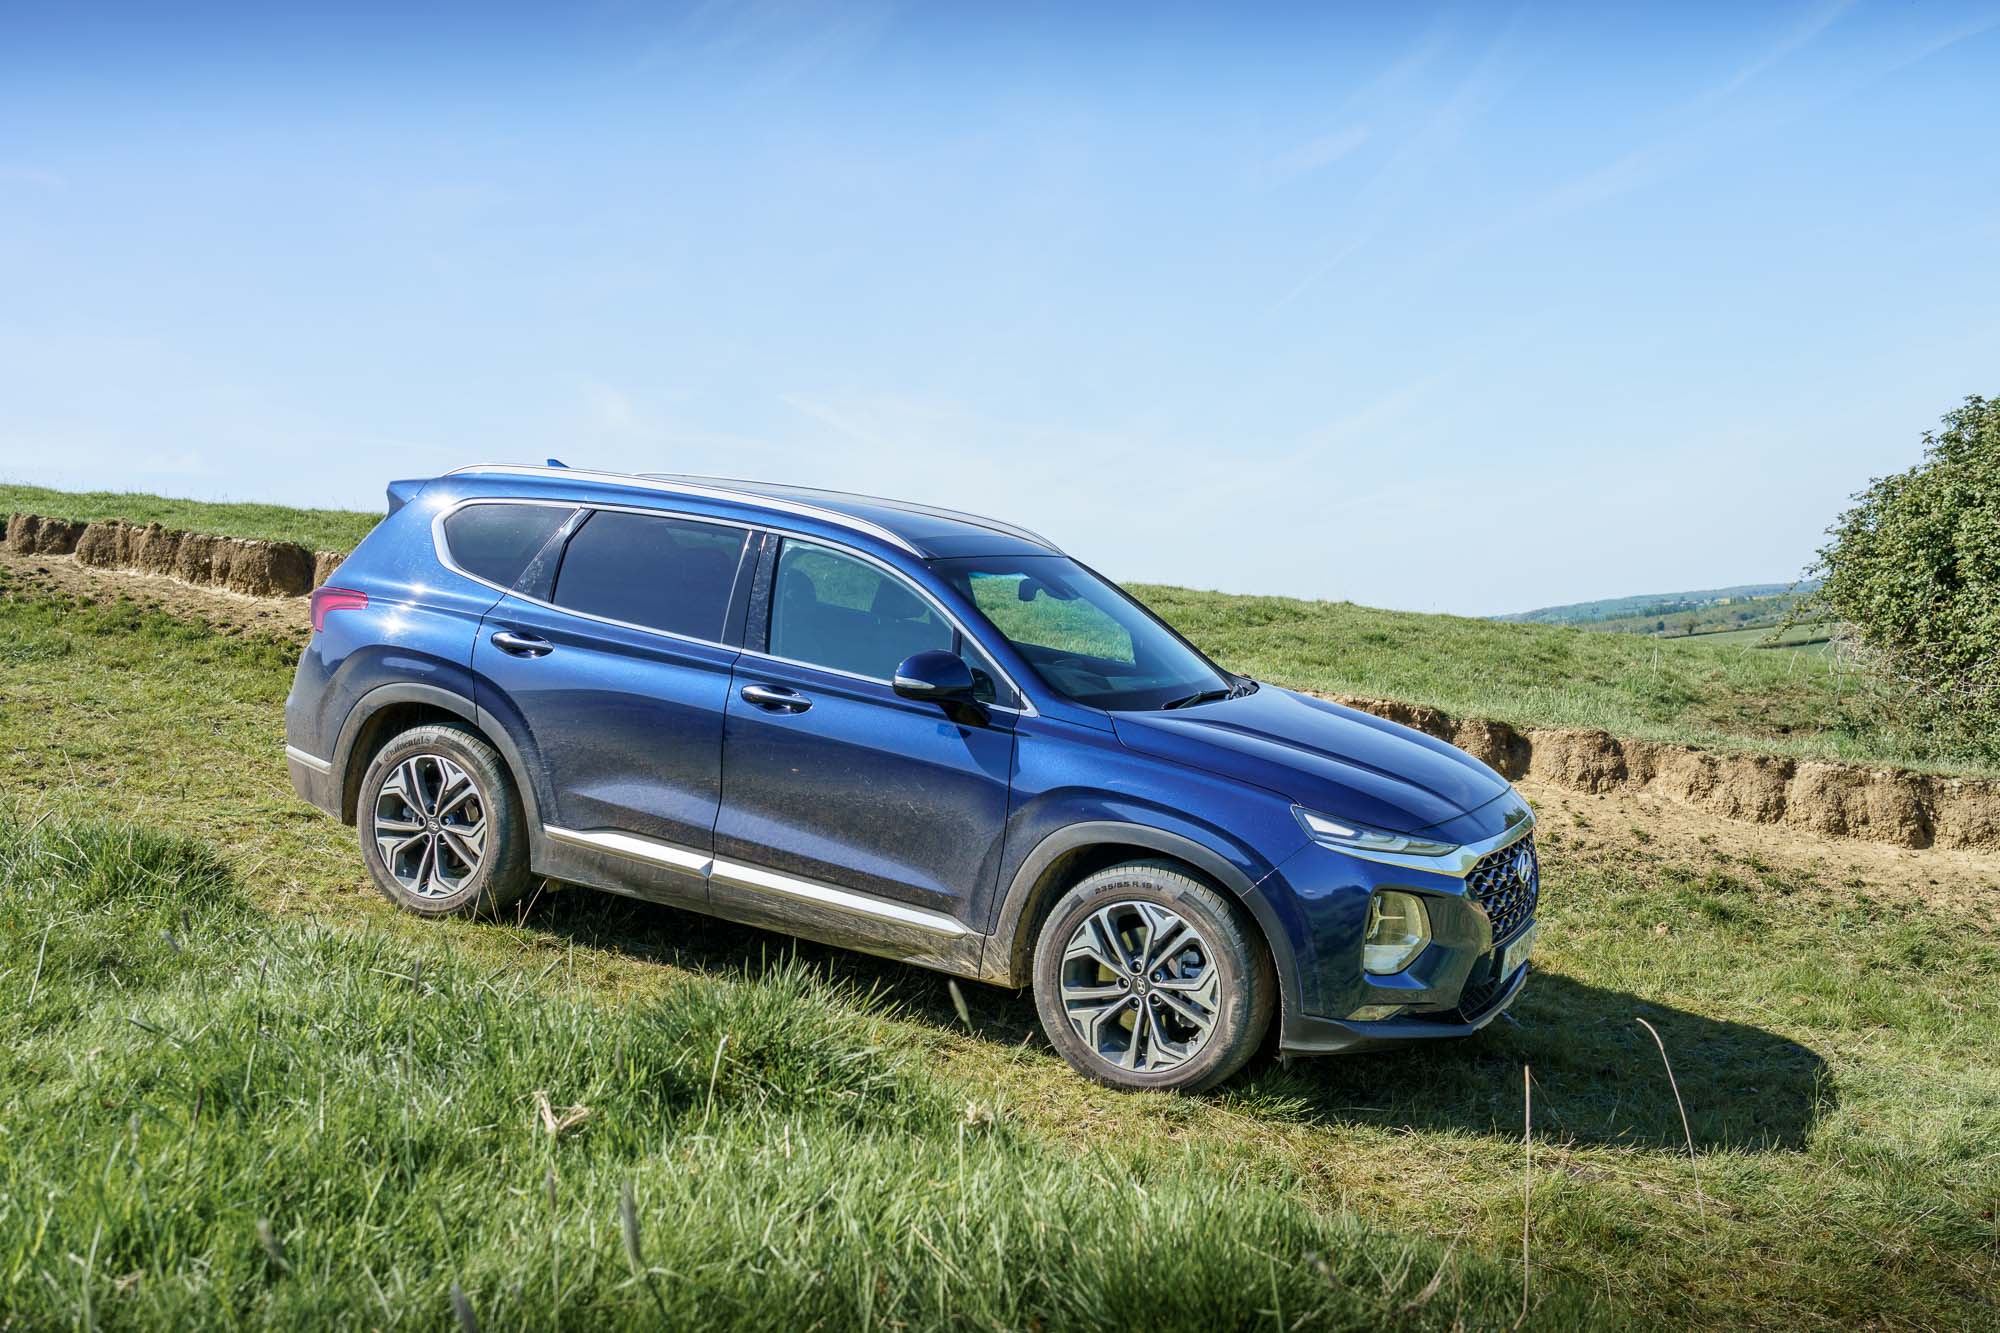 Hyundai Tucson Vs Santa Fe Differences Comparison Pros Cons